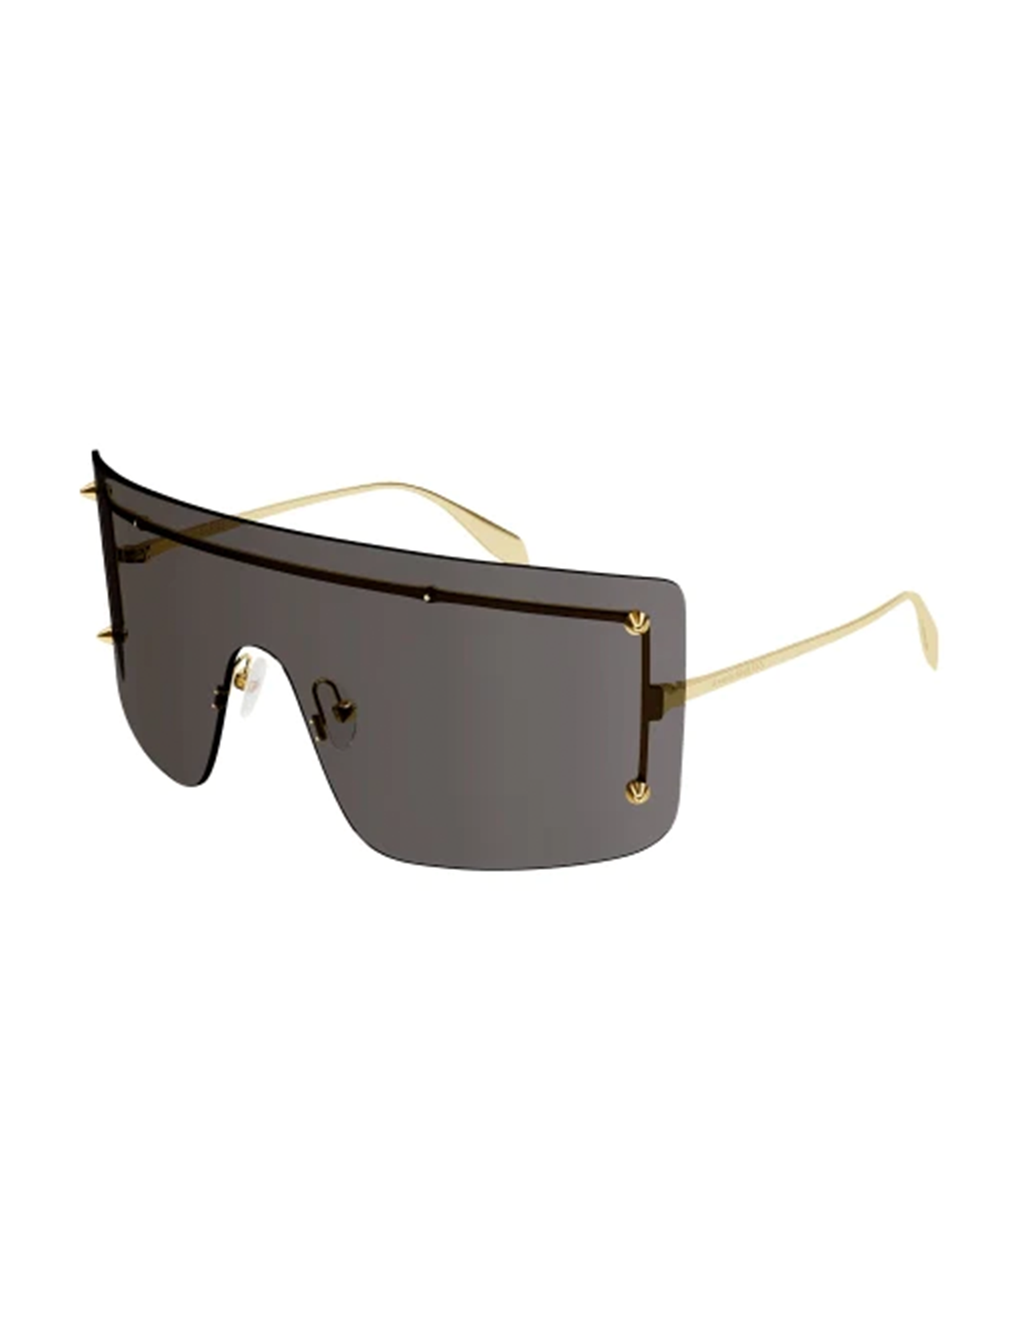 Shield Sunglasses, Gold/Brown